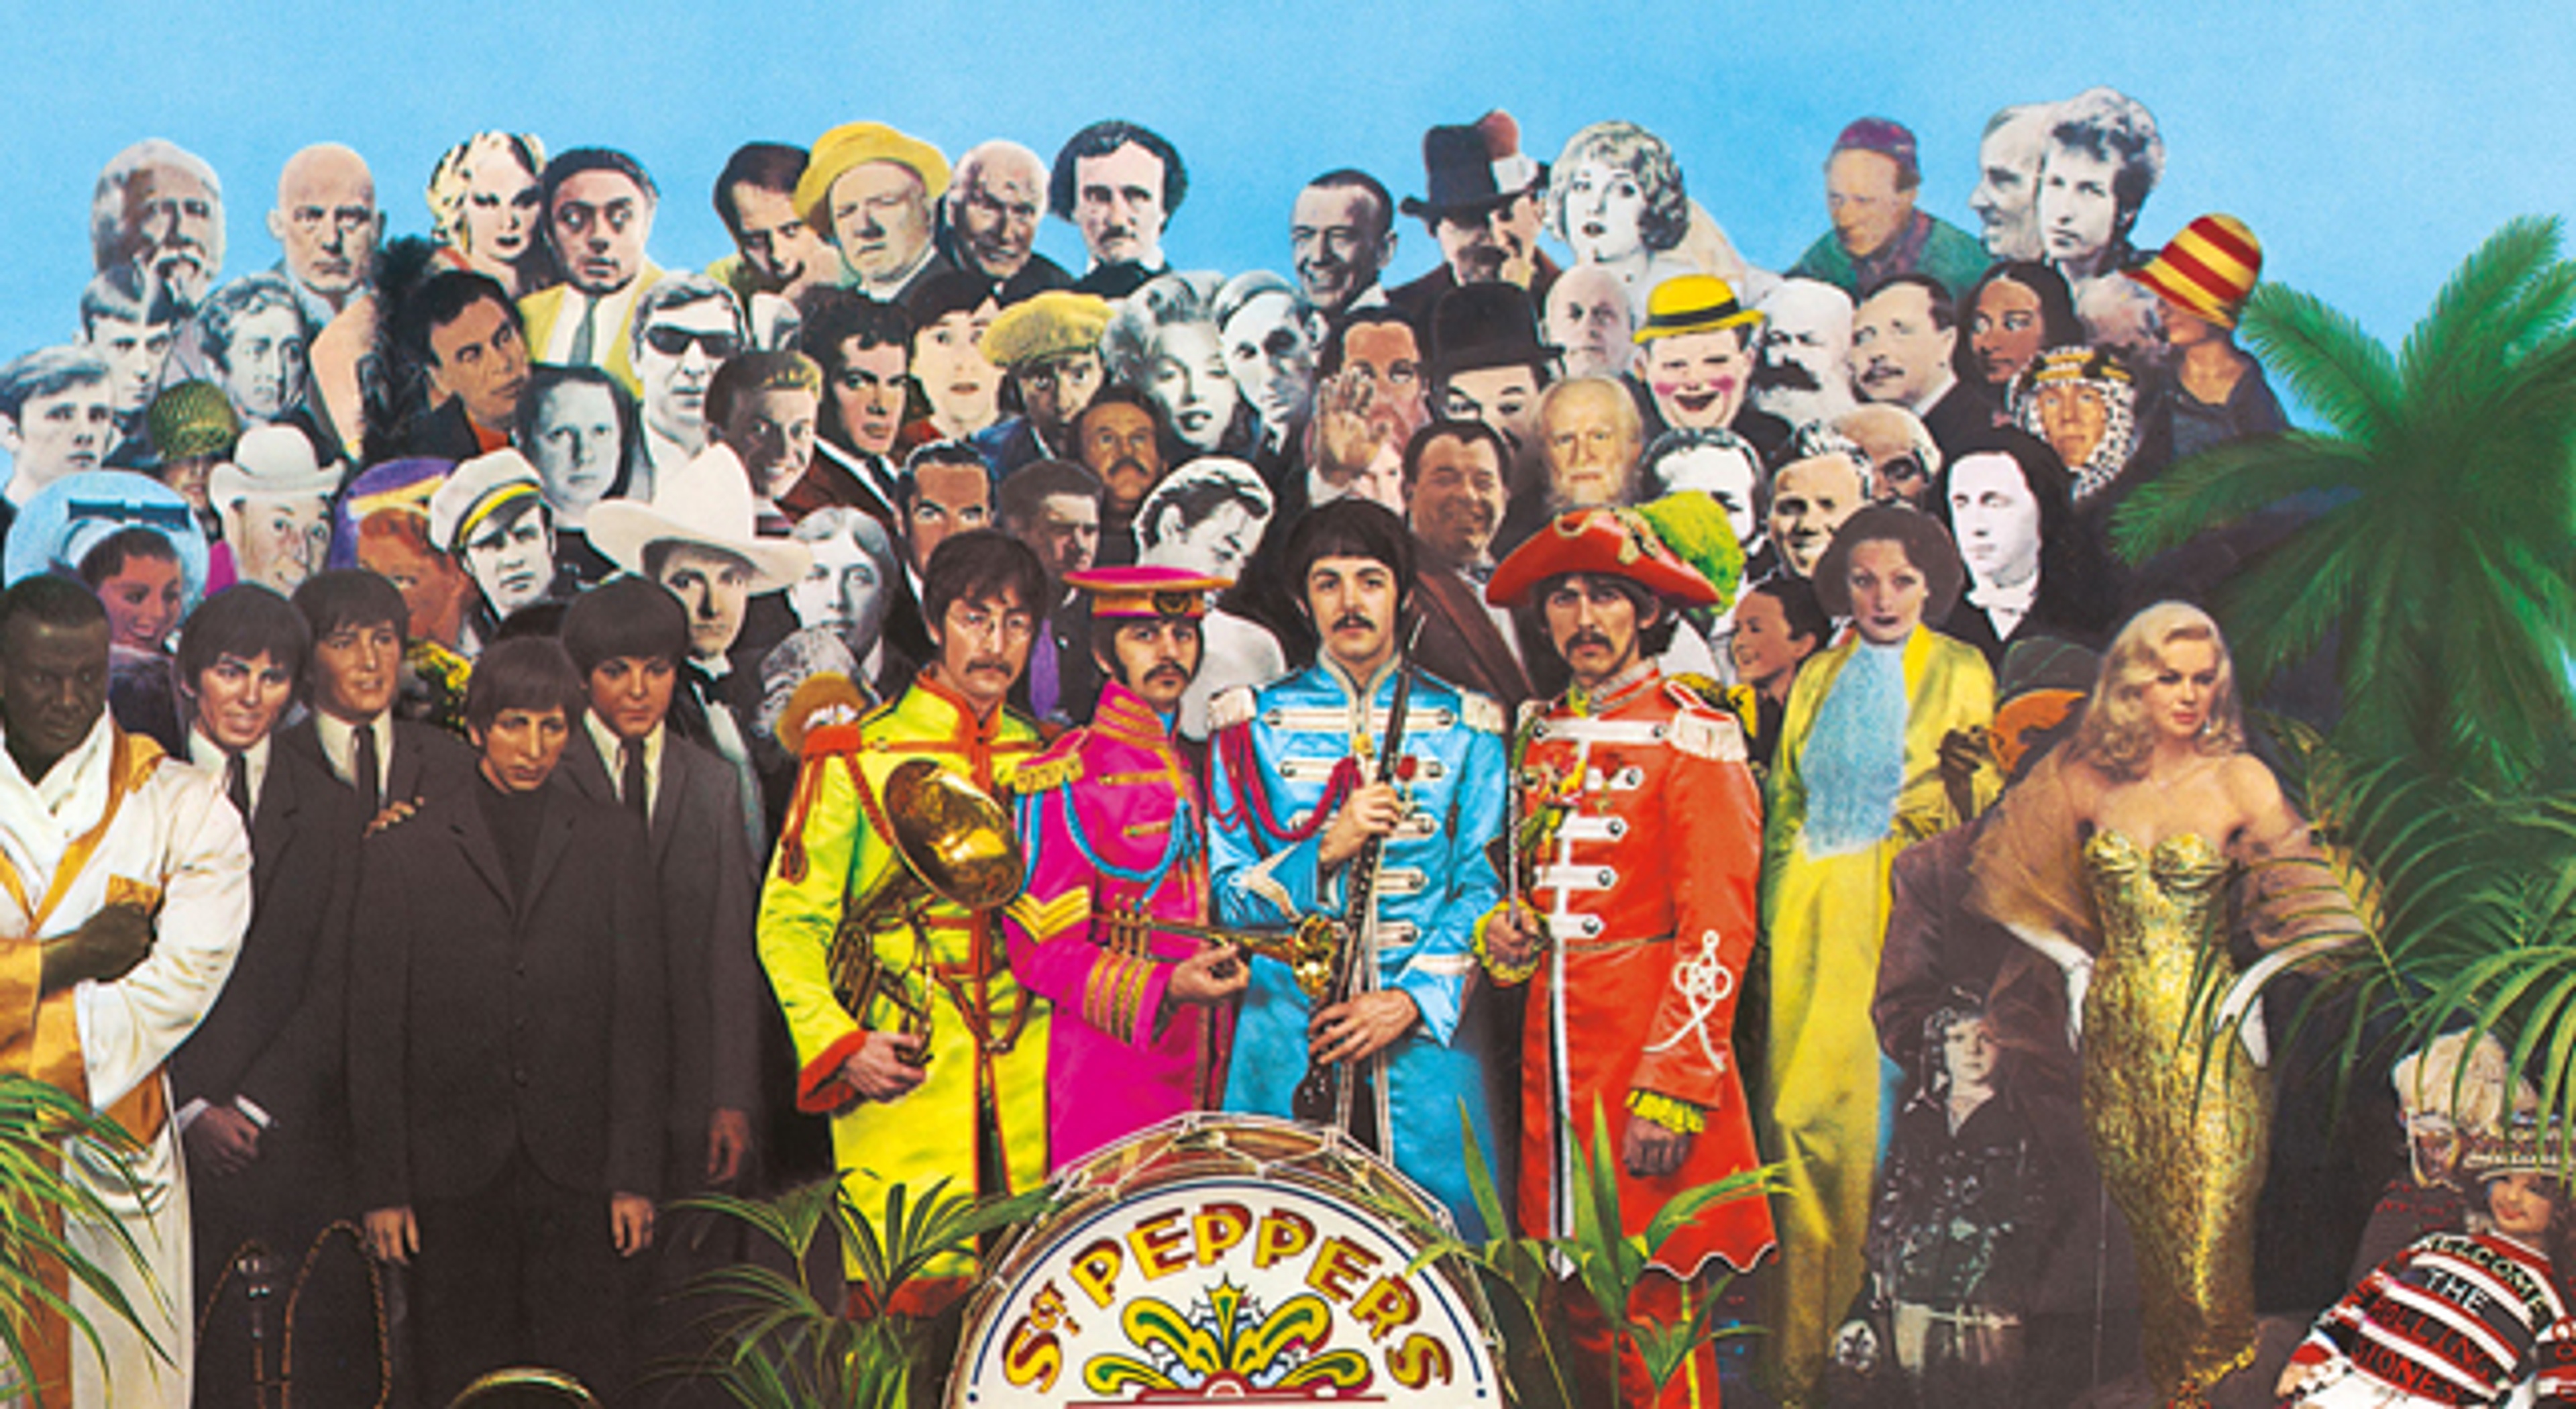 Beatles sgt peppers lonely hearts club. Обложка альбома Битлз клуб одиноких сердец сержанта Пеппера. The Beatles сержант Пеппер. Sgt Pepper's Lonely Hearts Club Band обложка. Альбом Битлз Sgt Pepper s Lonely Hearts Club.